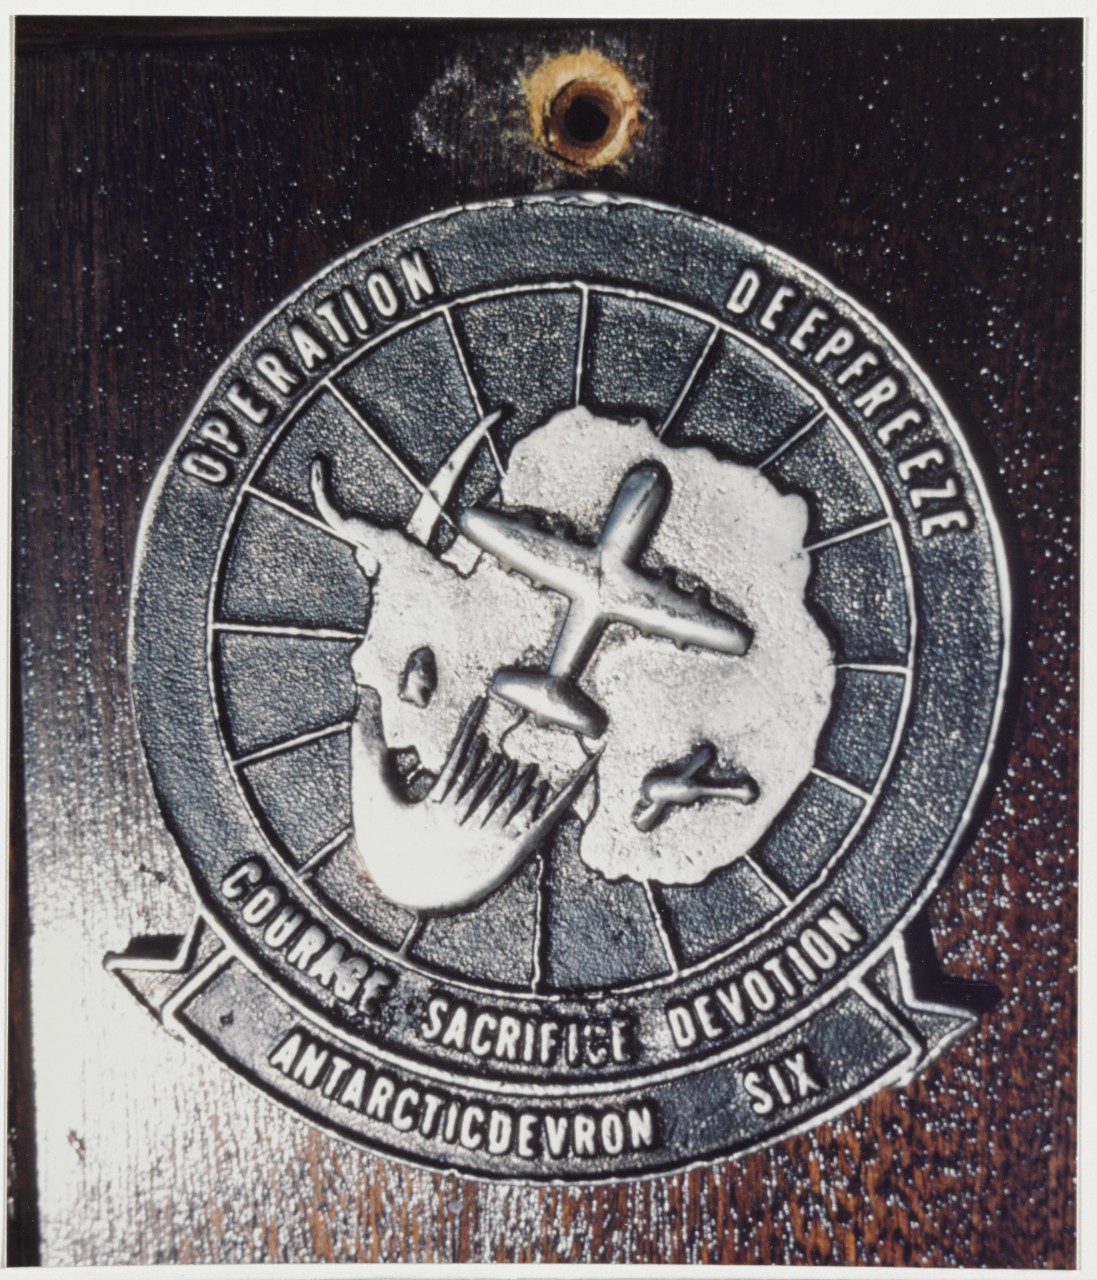 Insignia: Antarctic Development Squadron Six Emblem of the "Operation Deepfreeze" Unit, "Courage, Sacrifice, Devotion", received in 1984.